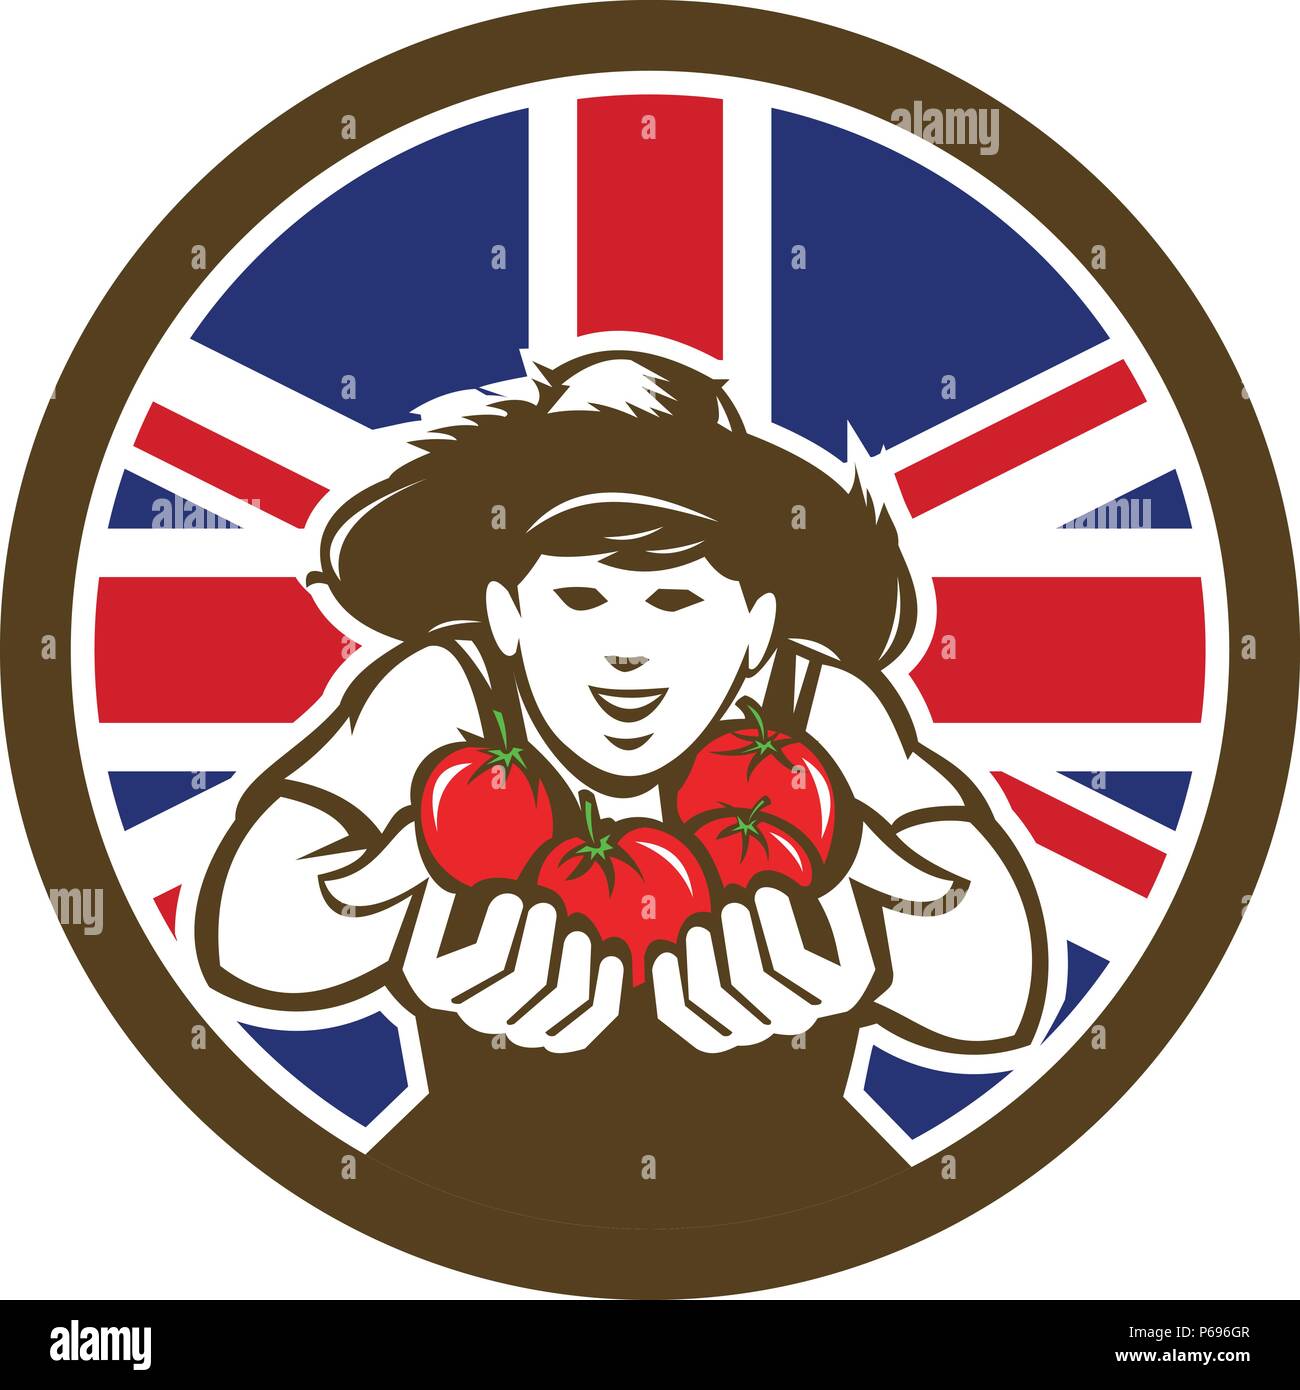 Icon retro style illustration of a British organic grown produce tomato farmer with United Kingdom UK, Great Britain Union Jack flag set inside circle Stock Vector